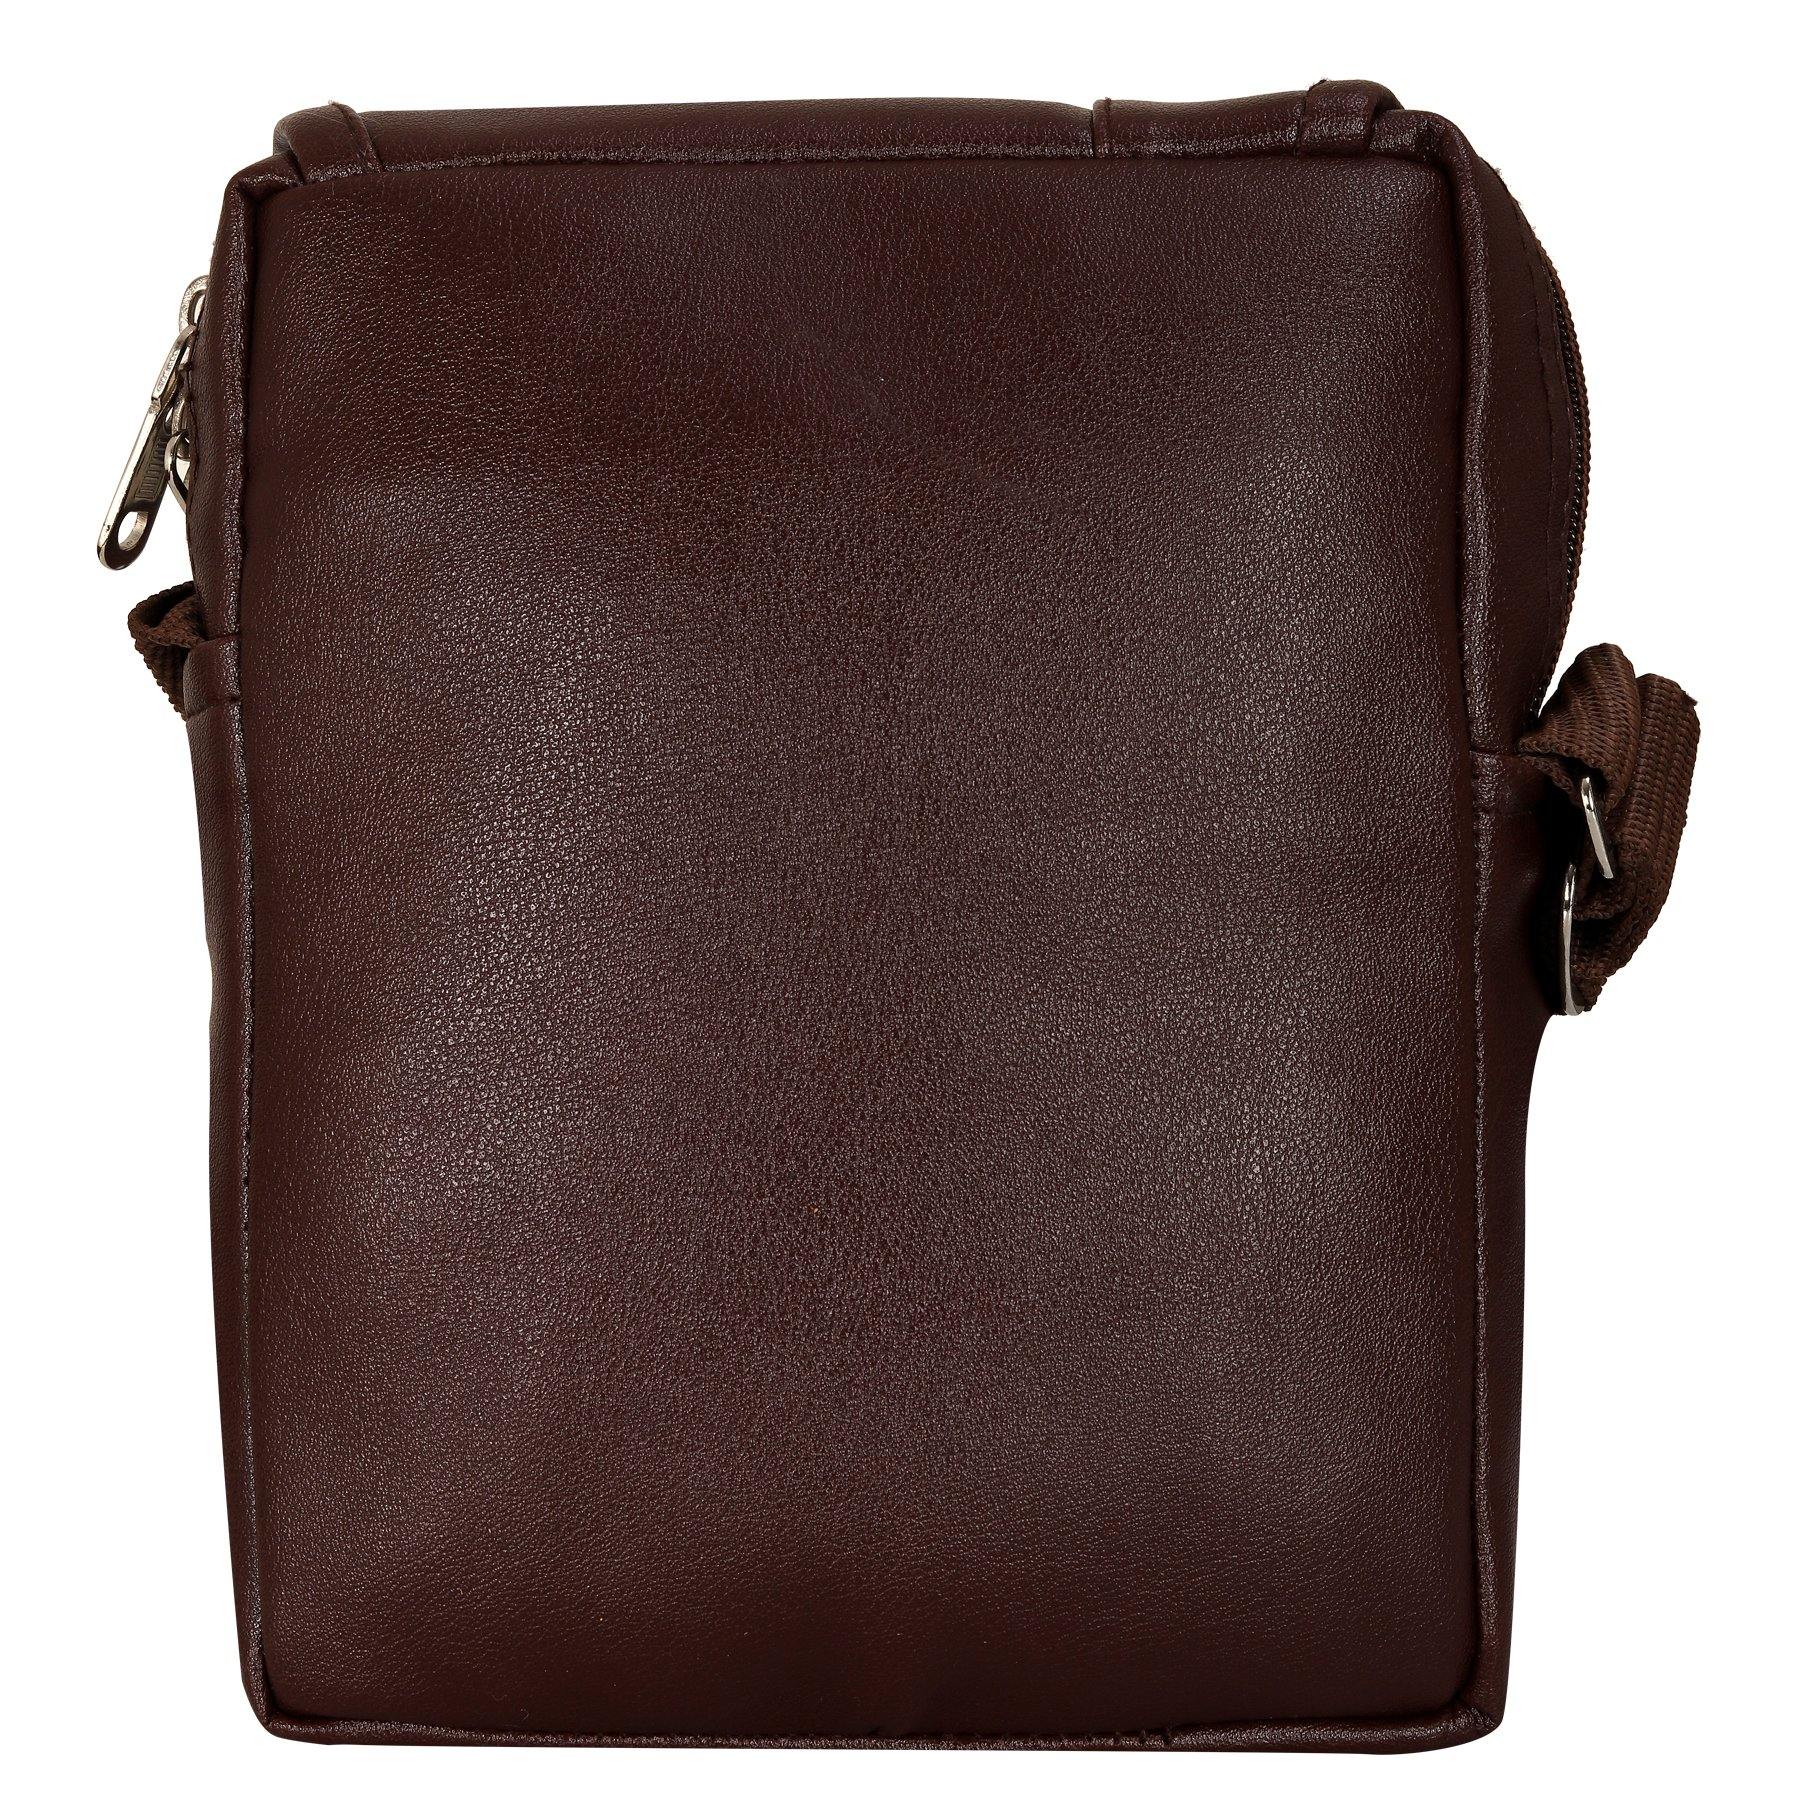 Leather World Pu Leather Mini 14 inch Laptop Office Bag  Office Bag    Leatherworldonlinenet